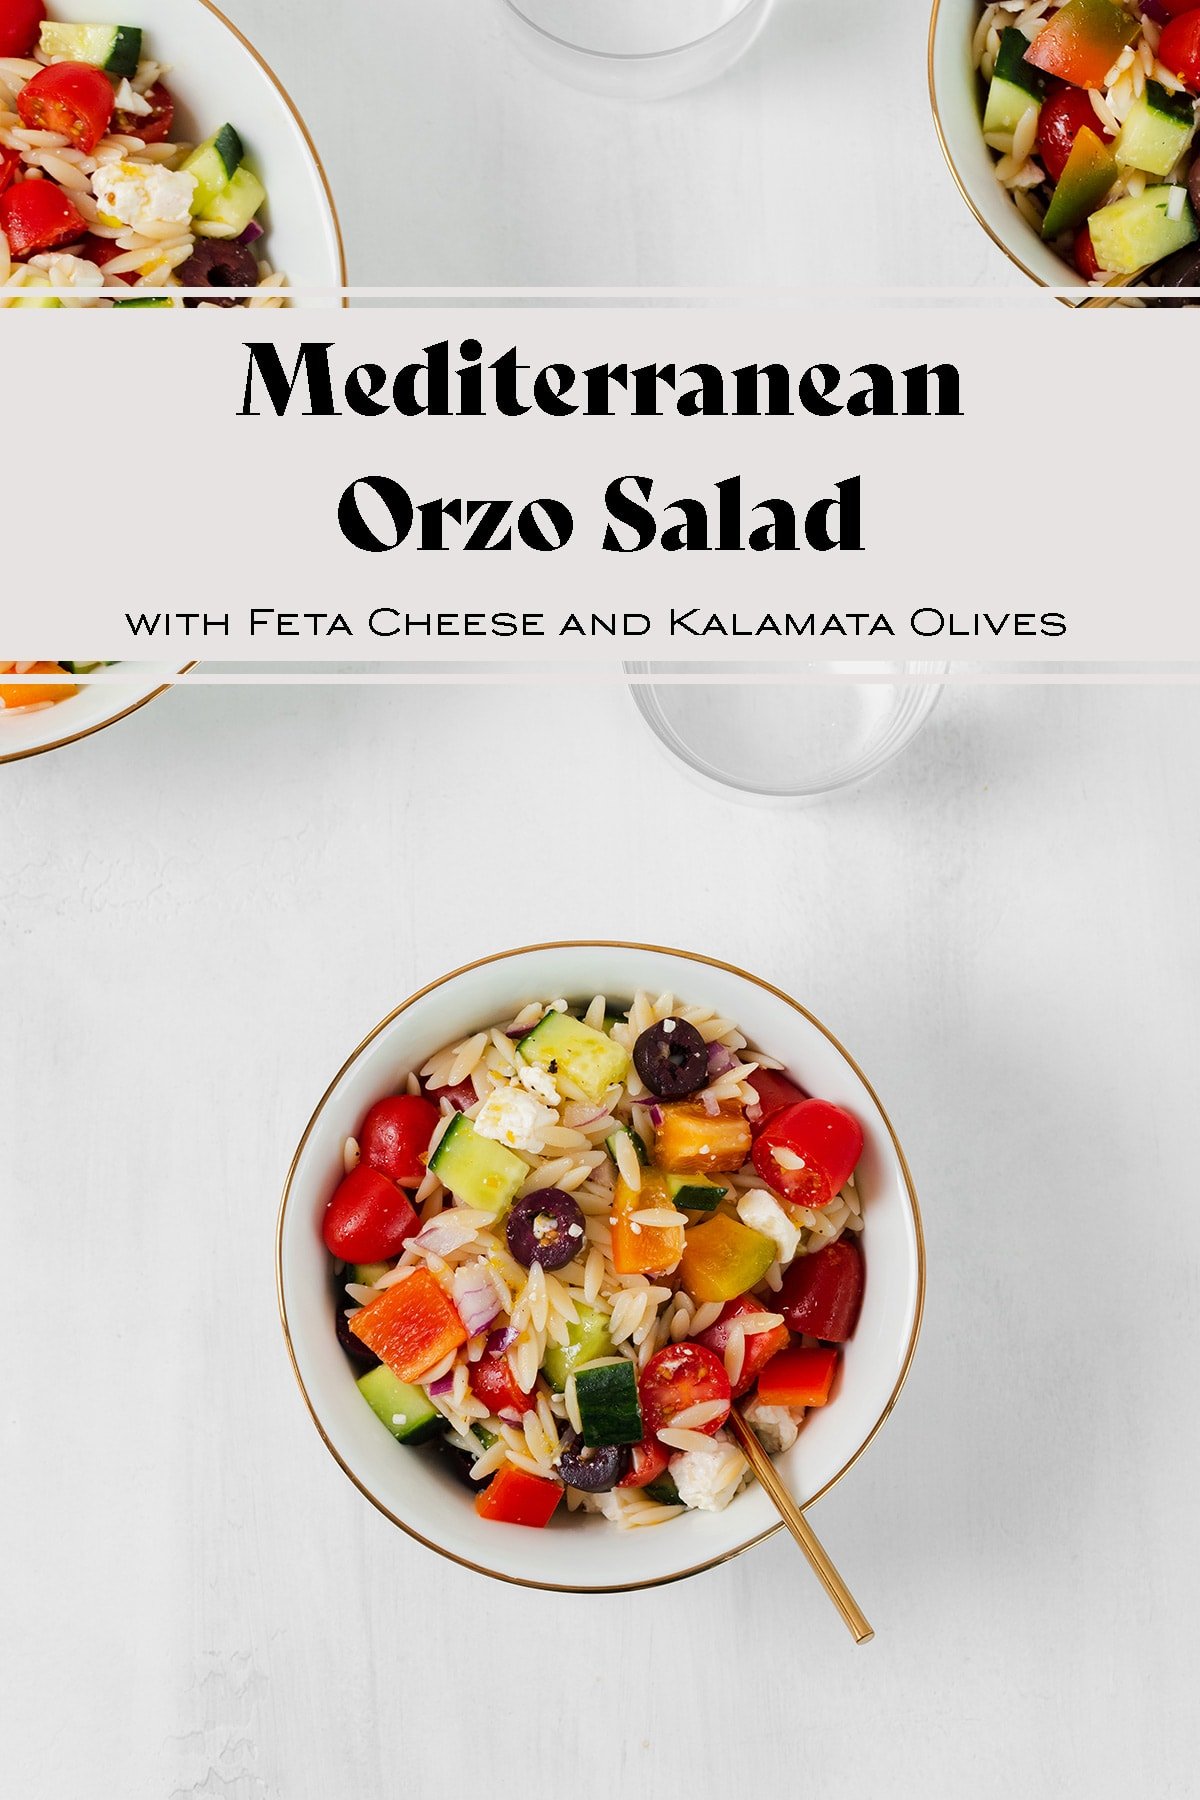 Mediterranean Orzo Salad with Lemon Vinaigrette